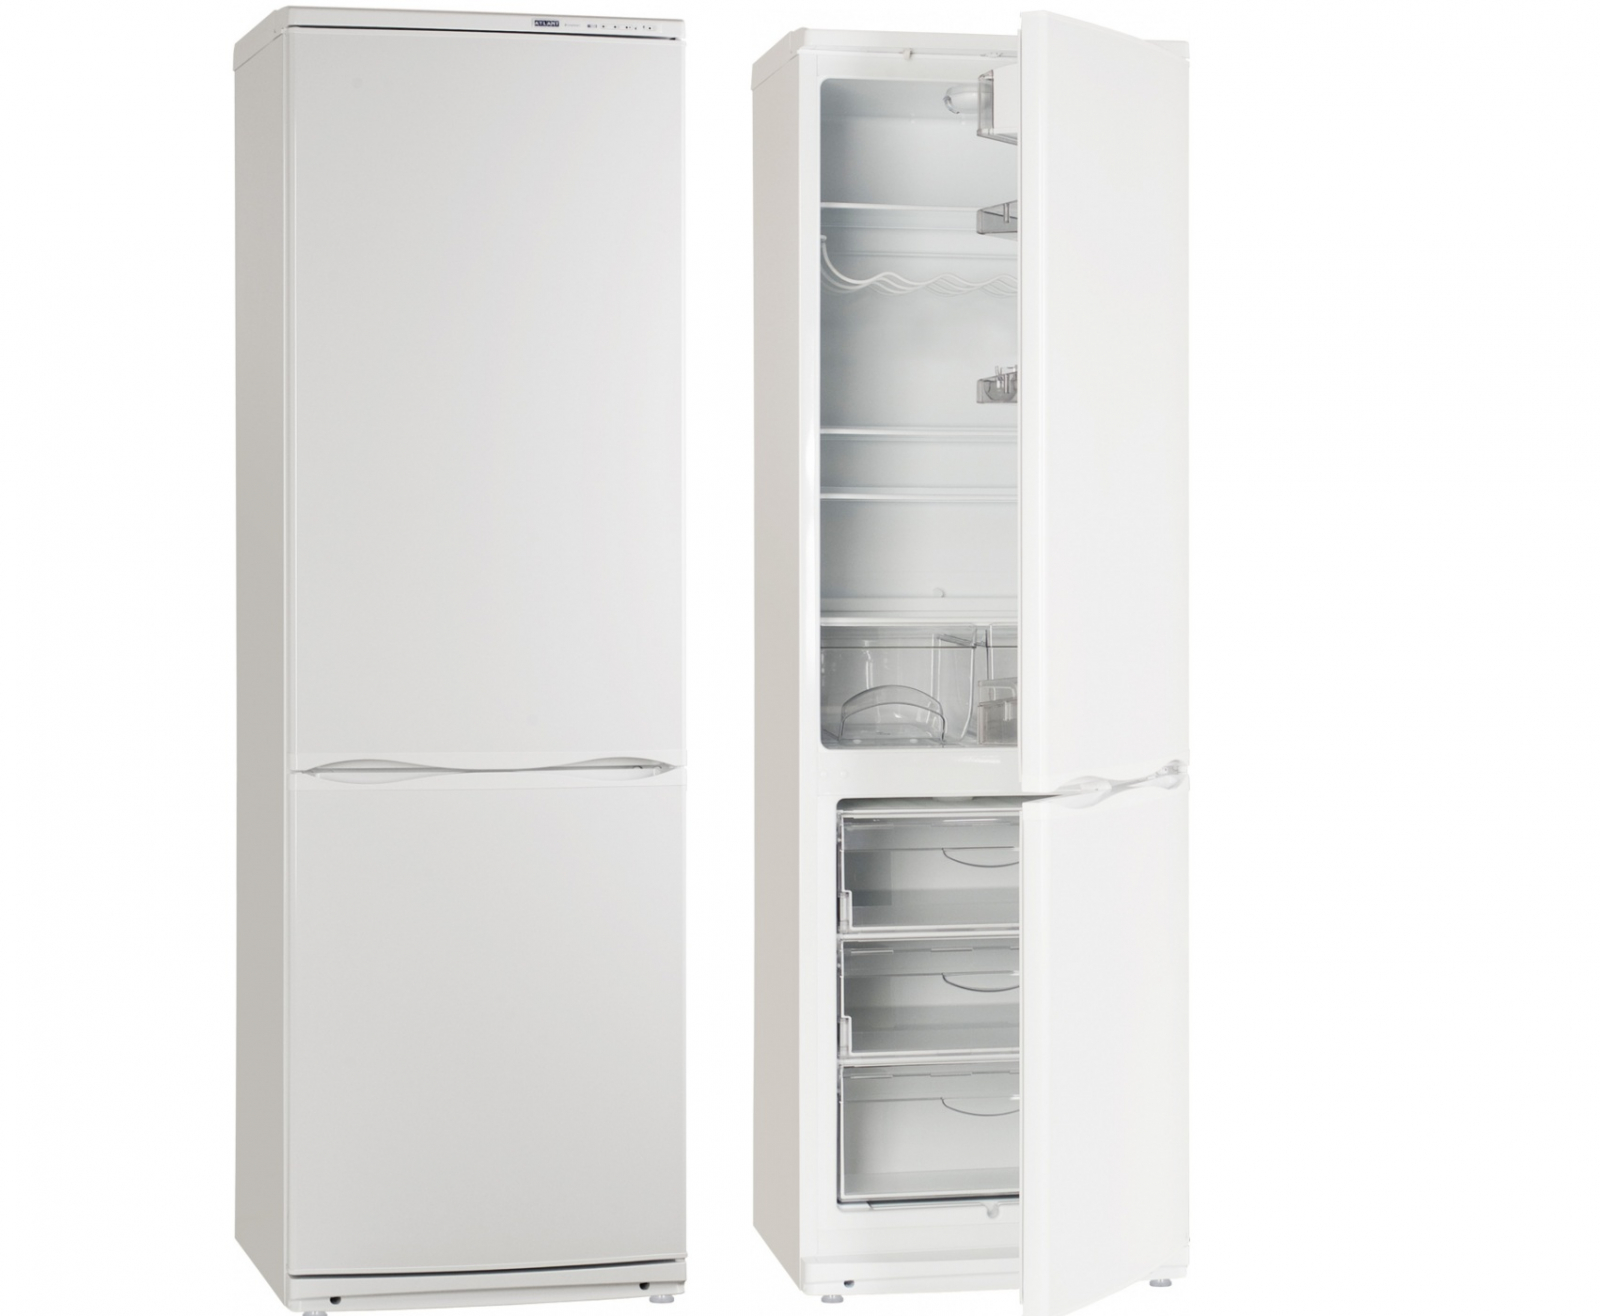 холодильник atlant xm 6024-031, купить в Красноярске холодильник atlant xm 6024-031,  купить в Красноярске дешево холодильник atlant xm 6024-031, купить в Красноярске минимальной цене холодильник atlant xm 6024-031